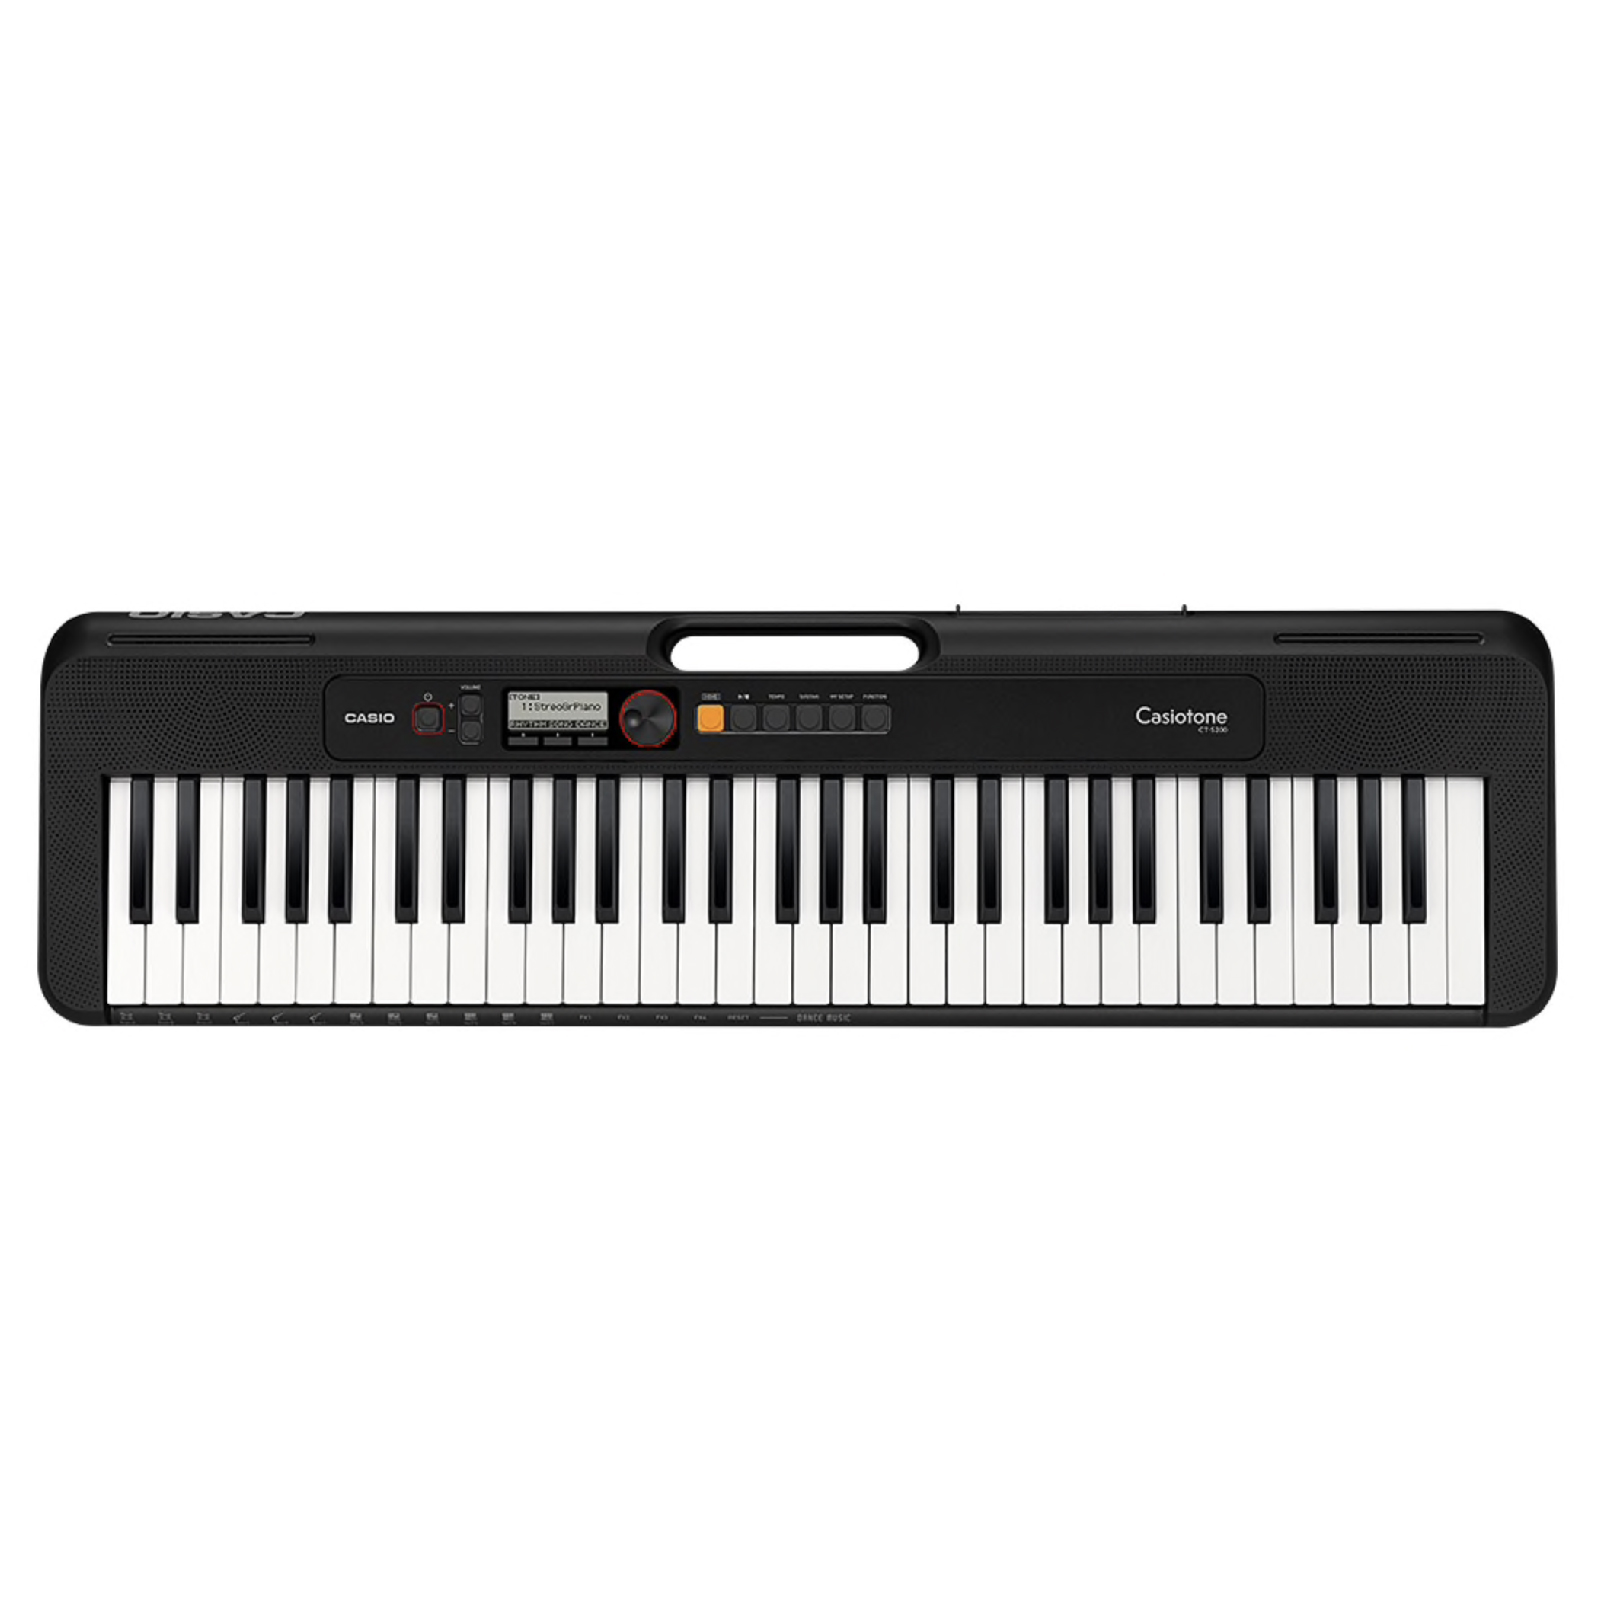 Casio Portable Music Keyboard, Black, CTS200BKC2